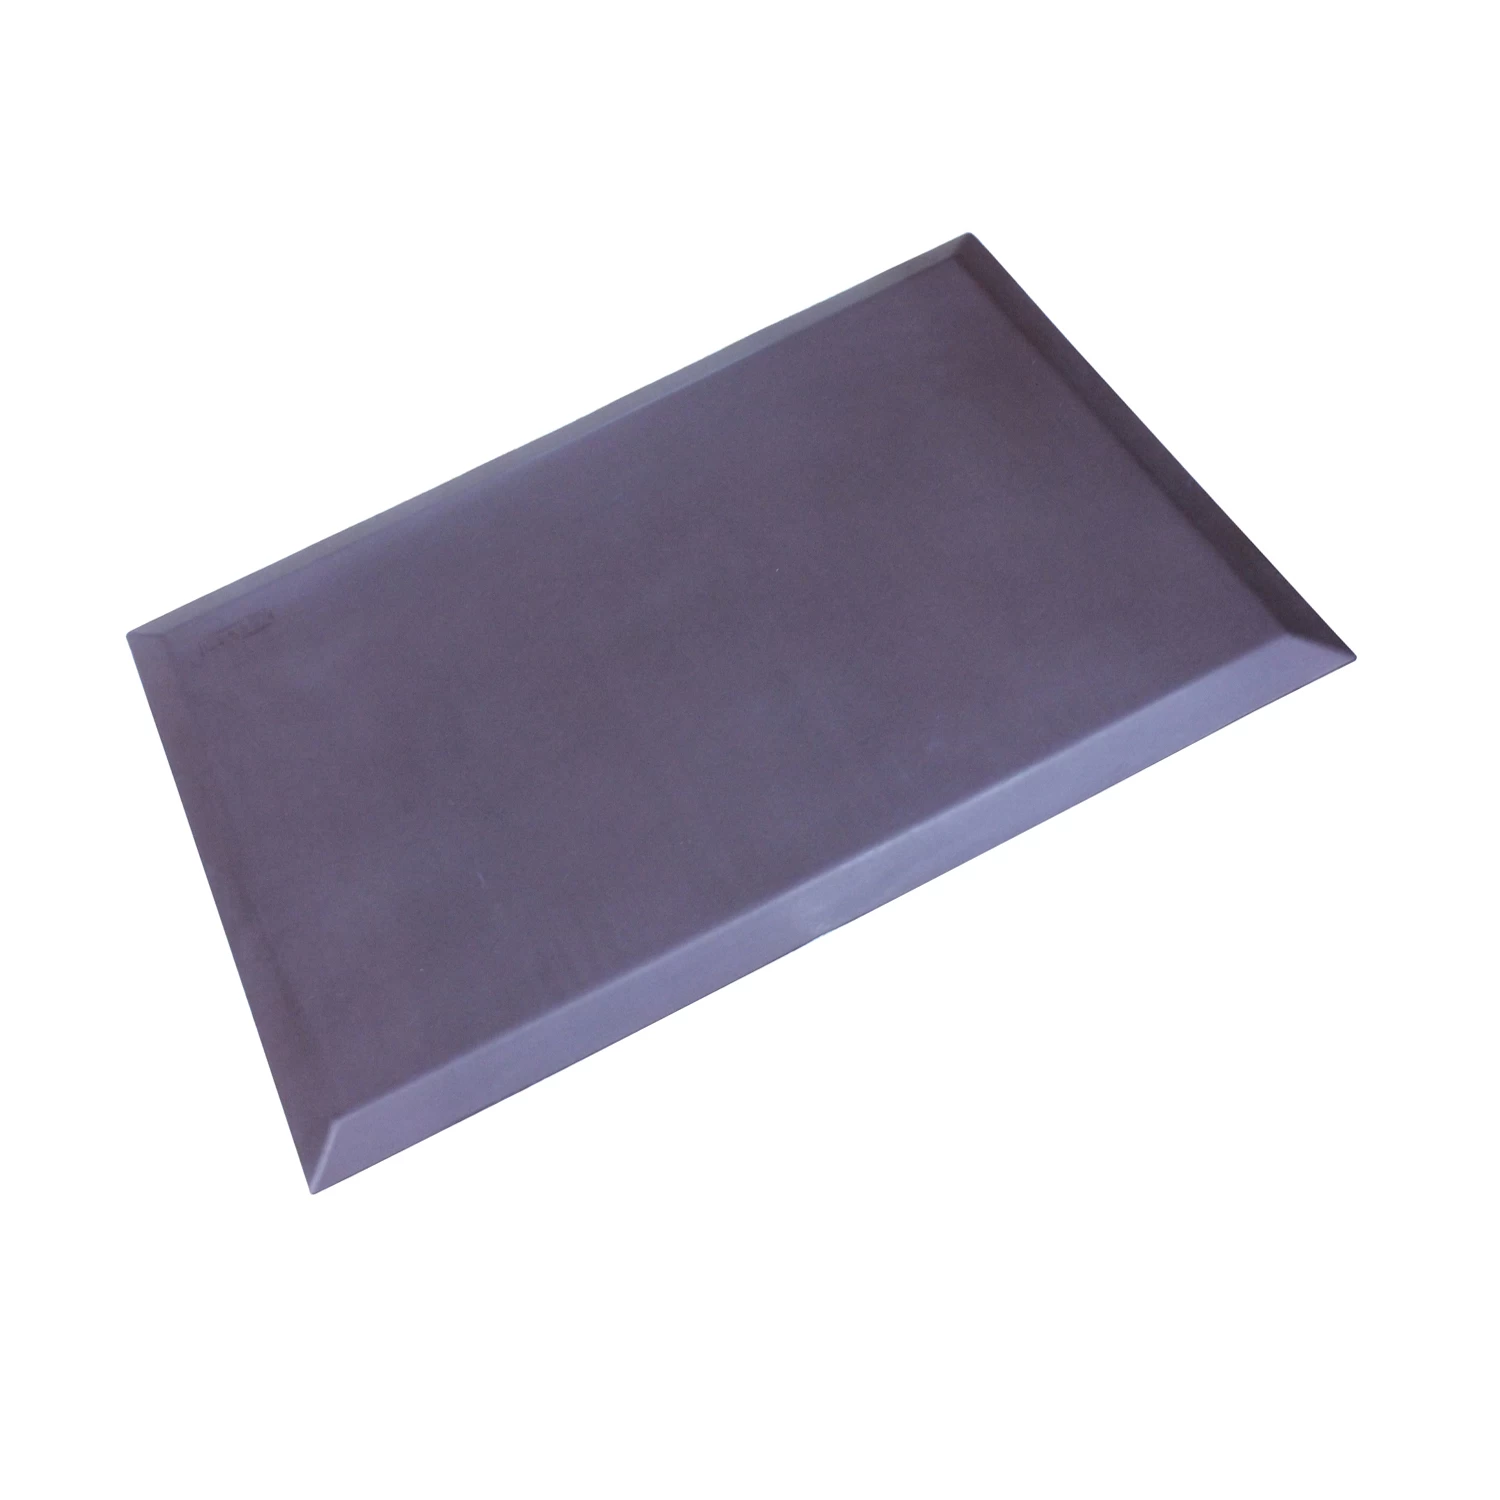 China Good Quality Pu Anti Fatigue Standing Desk Mat,PU floor mat,standing desk mat,anti-fatigue floor mat manufacturer